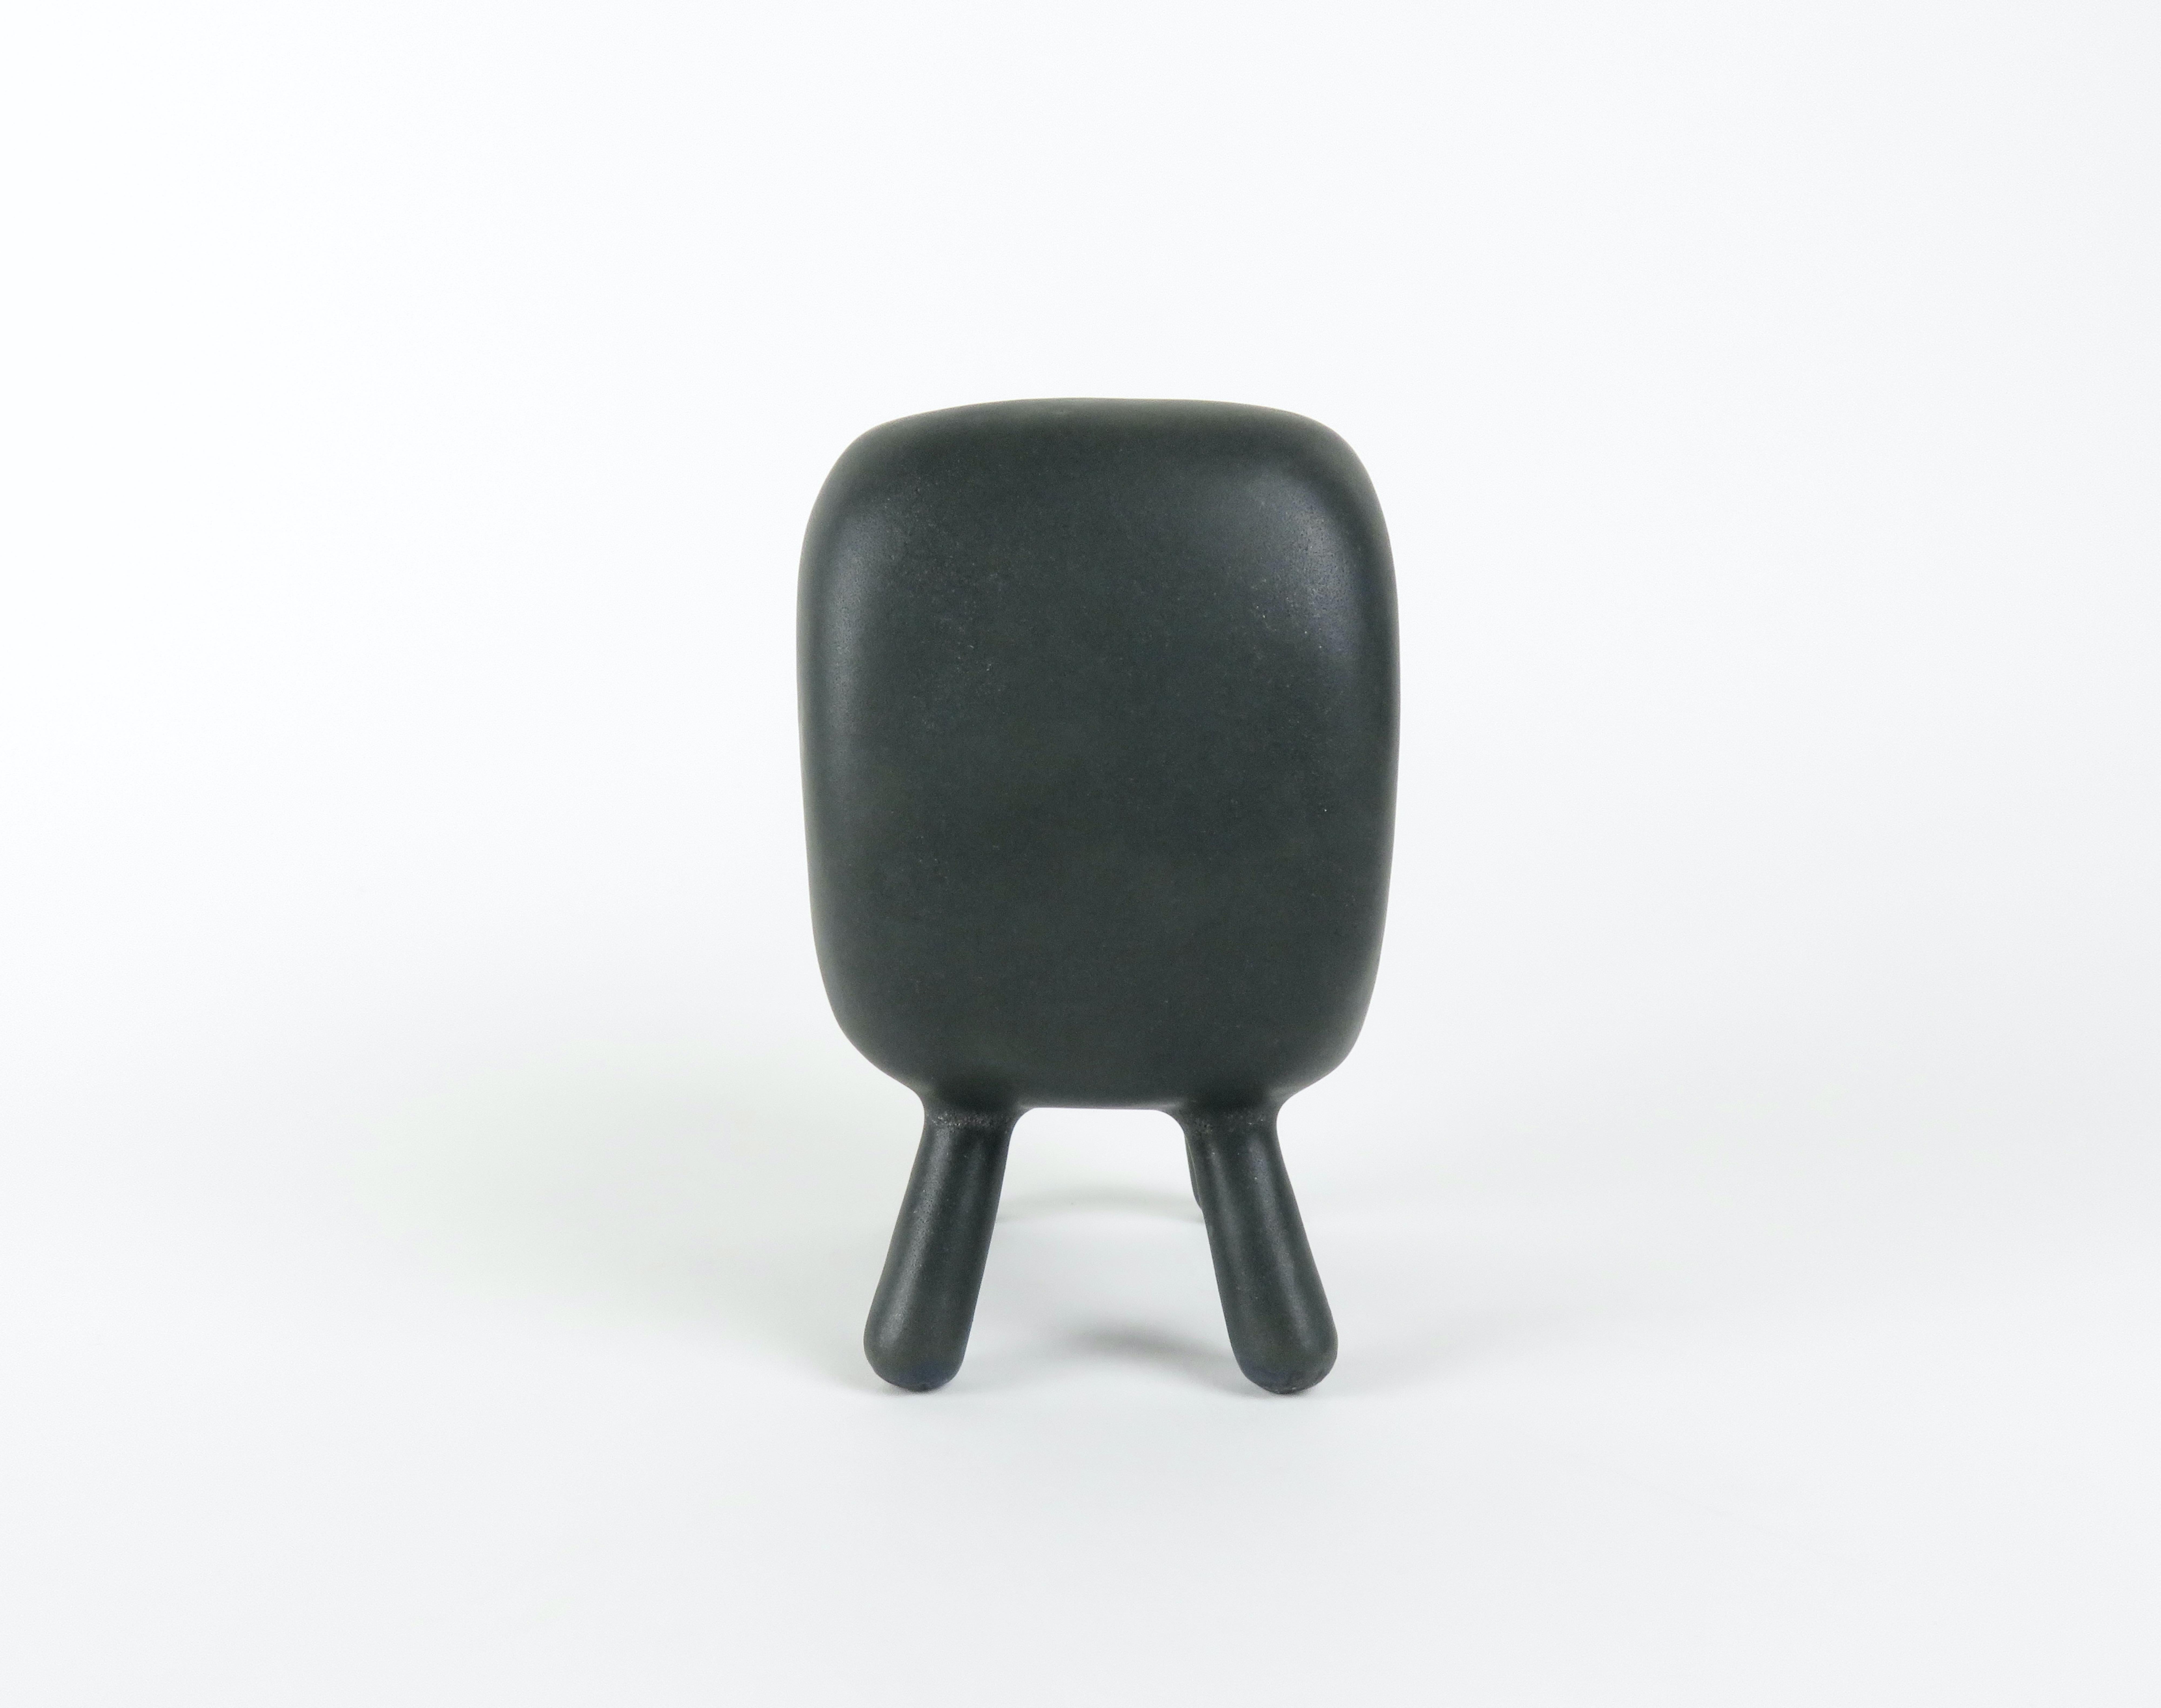 Organic Modern Smooth Black Glazed Ceramic Cube with Square Center Opening, 4 Legs, Handbuilt